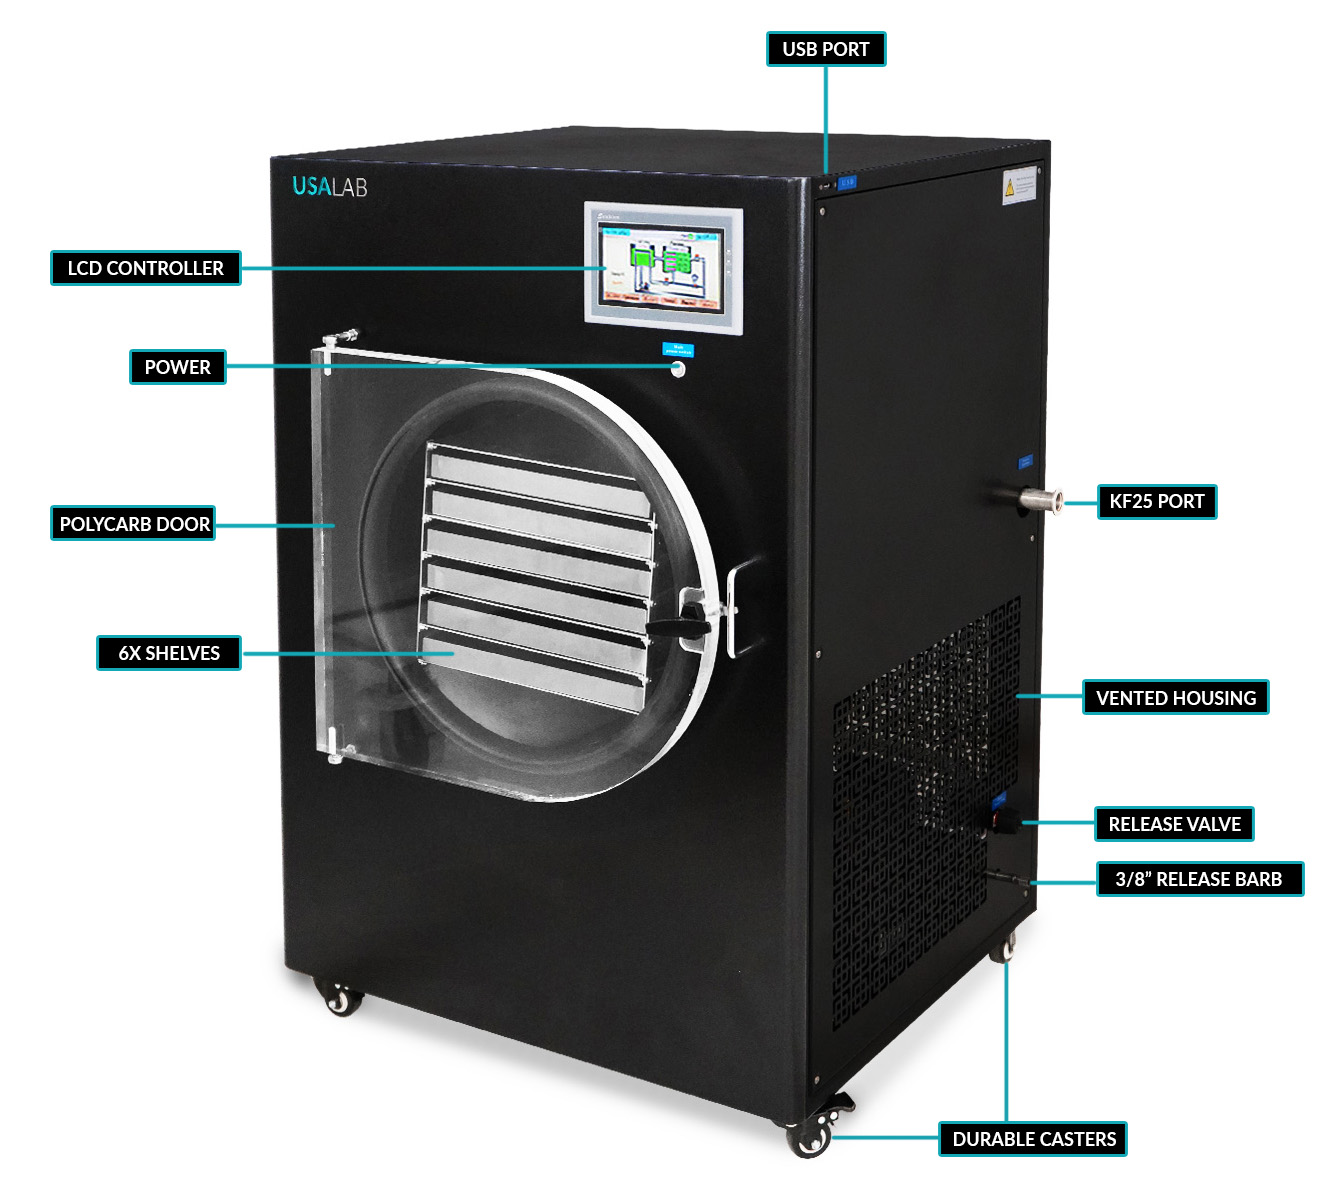 Laboratory Freeze Dryers - Vekuma Freeze Dryers